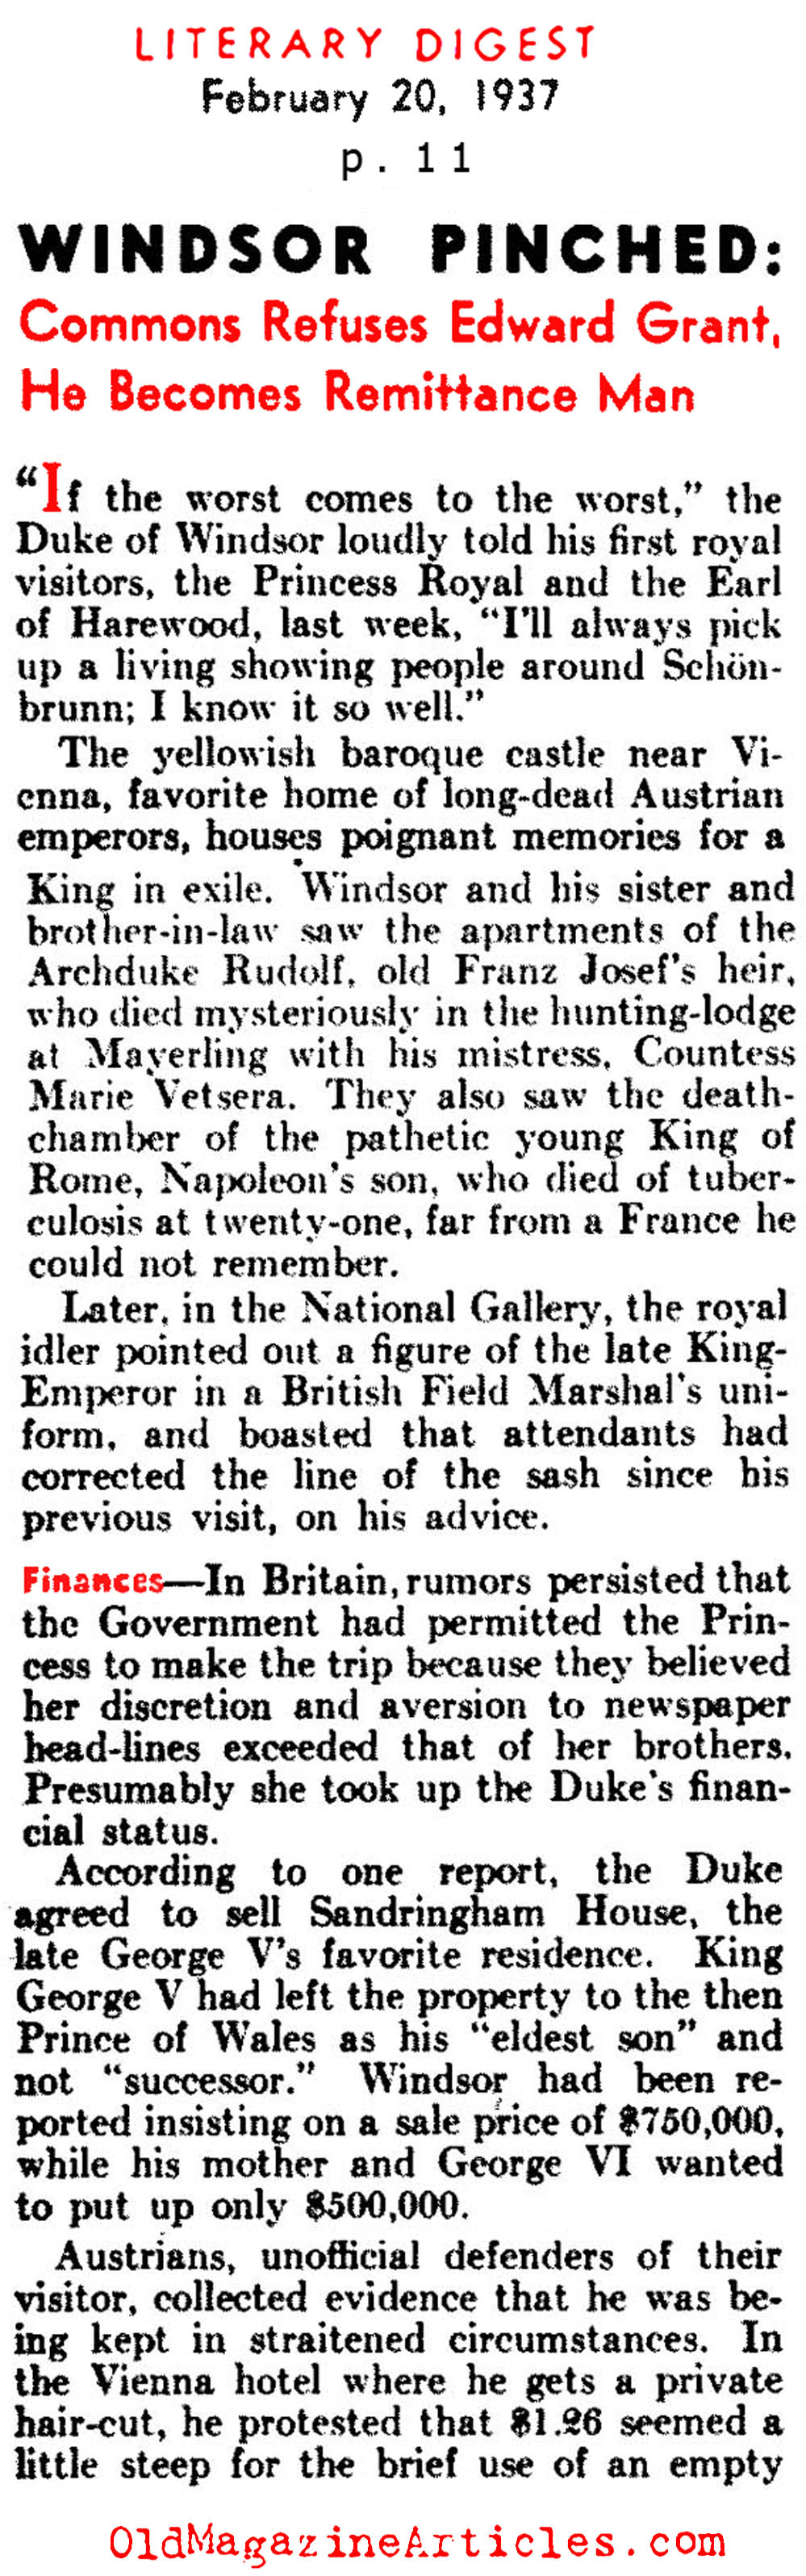 The Living Expenses of the Duke of Windsor (Literary Digest,1936)